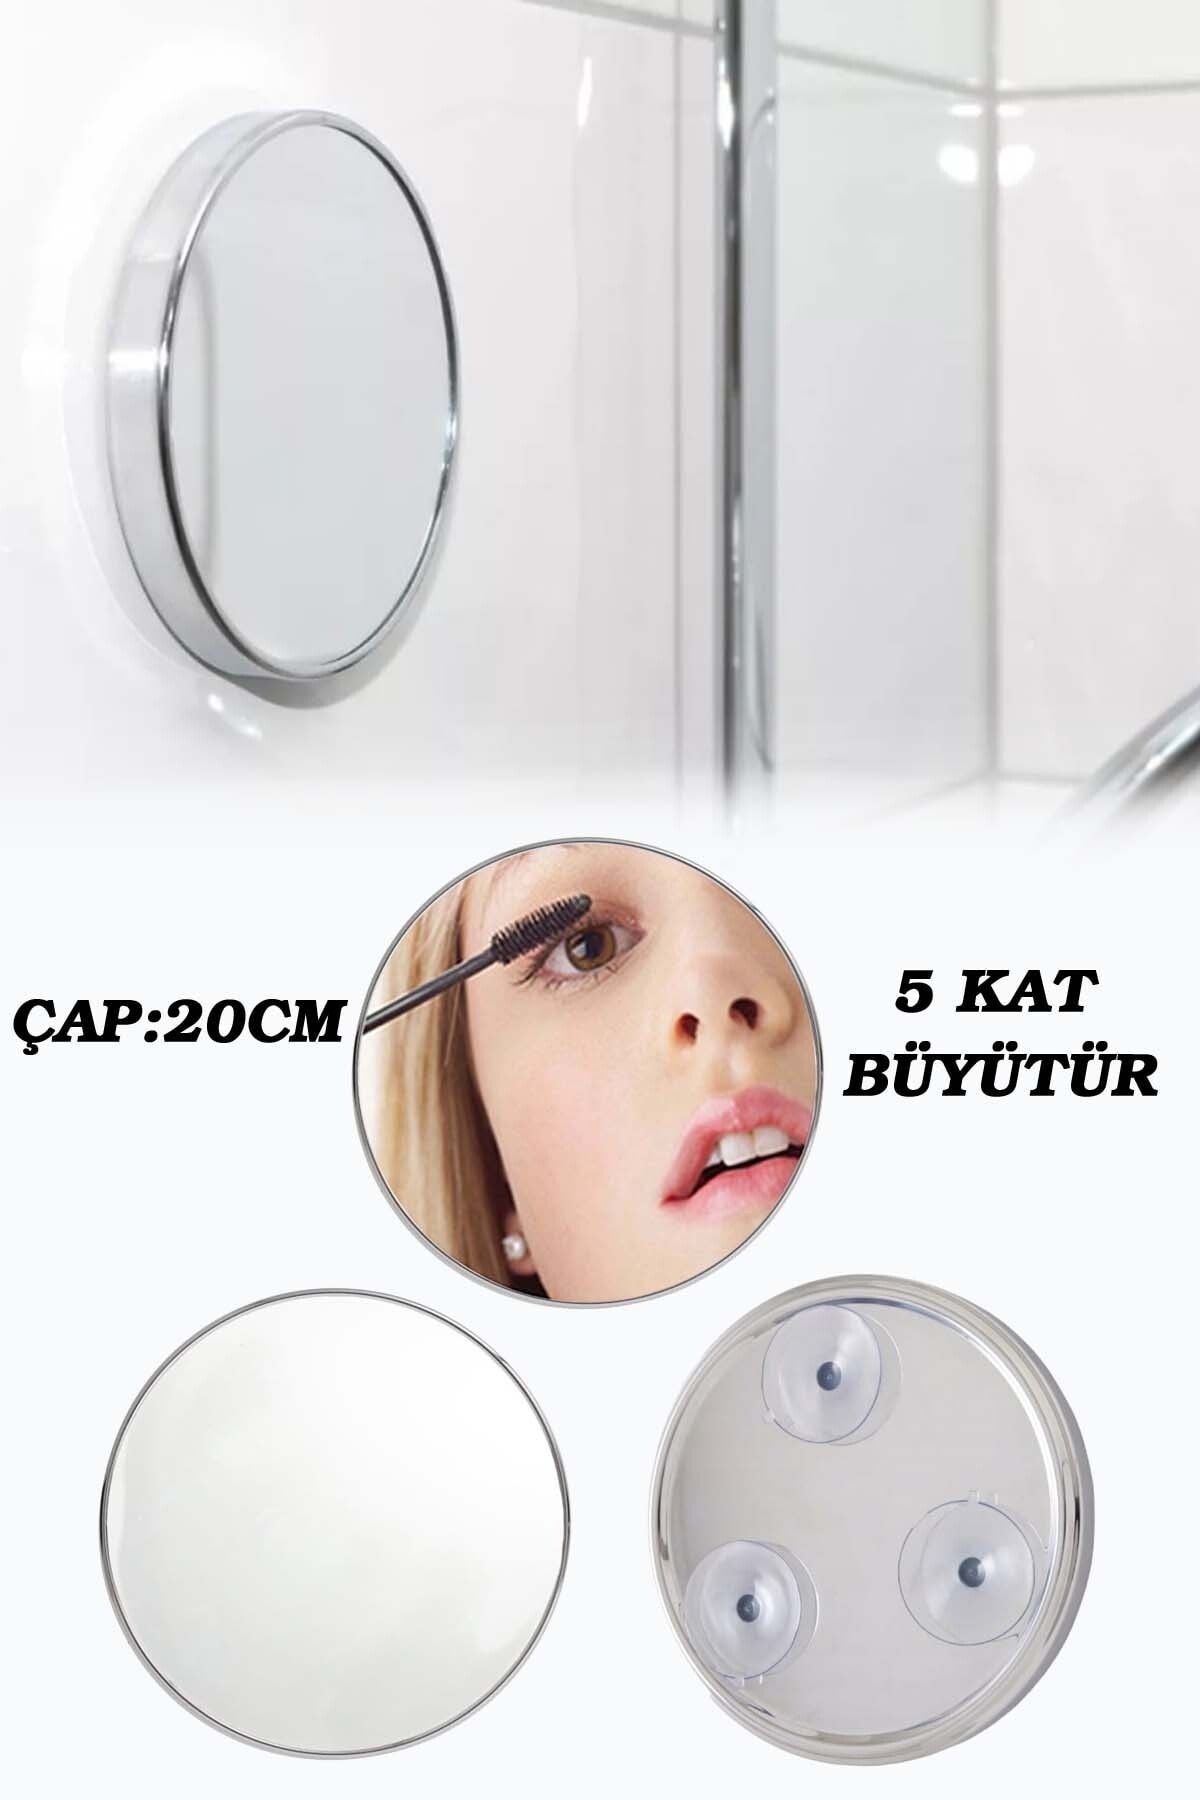 Binbirreyon Vantuzlu Makyaj Aynası 5x Büyüteçli Krom Ayna 20cm Mb056